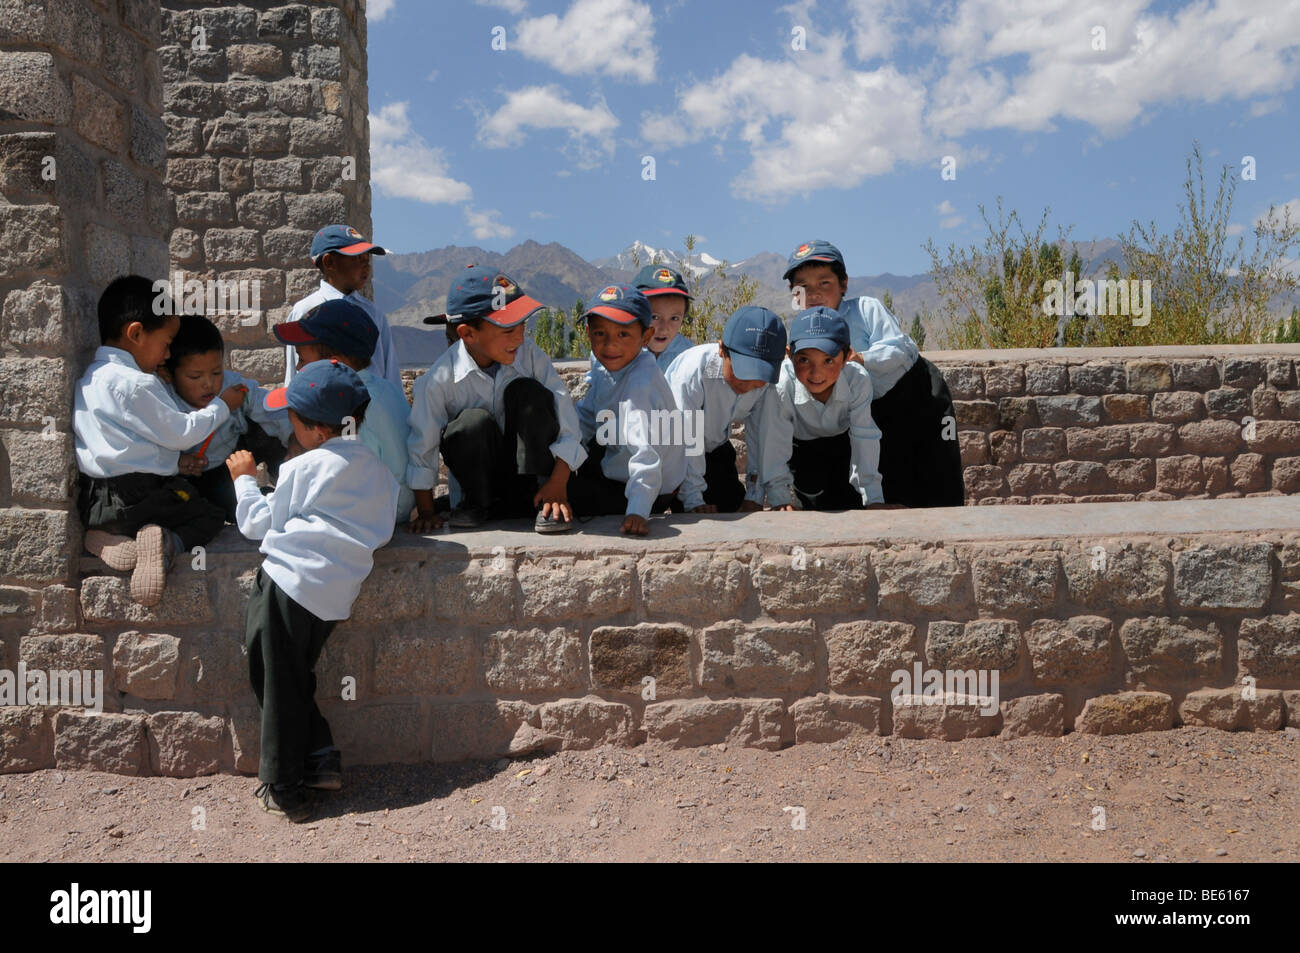 Elementary school children in the modern playground of the private-religious Druk White Lotus School, Shey, Ladakh, India, Nort Stock Photo